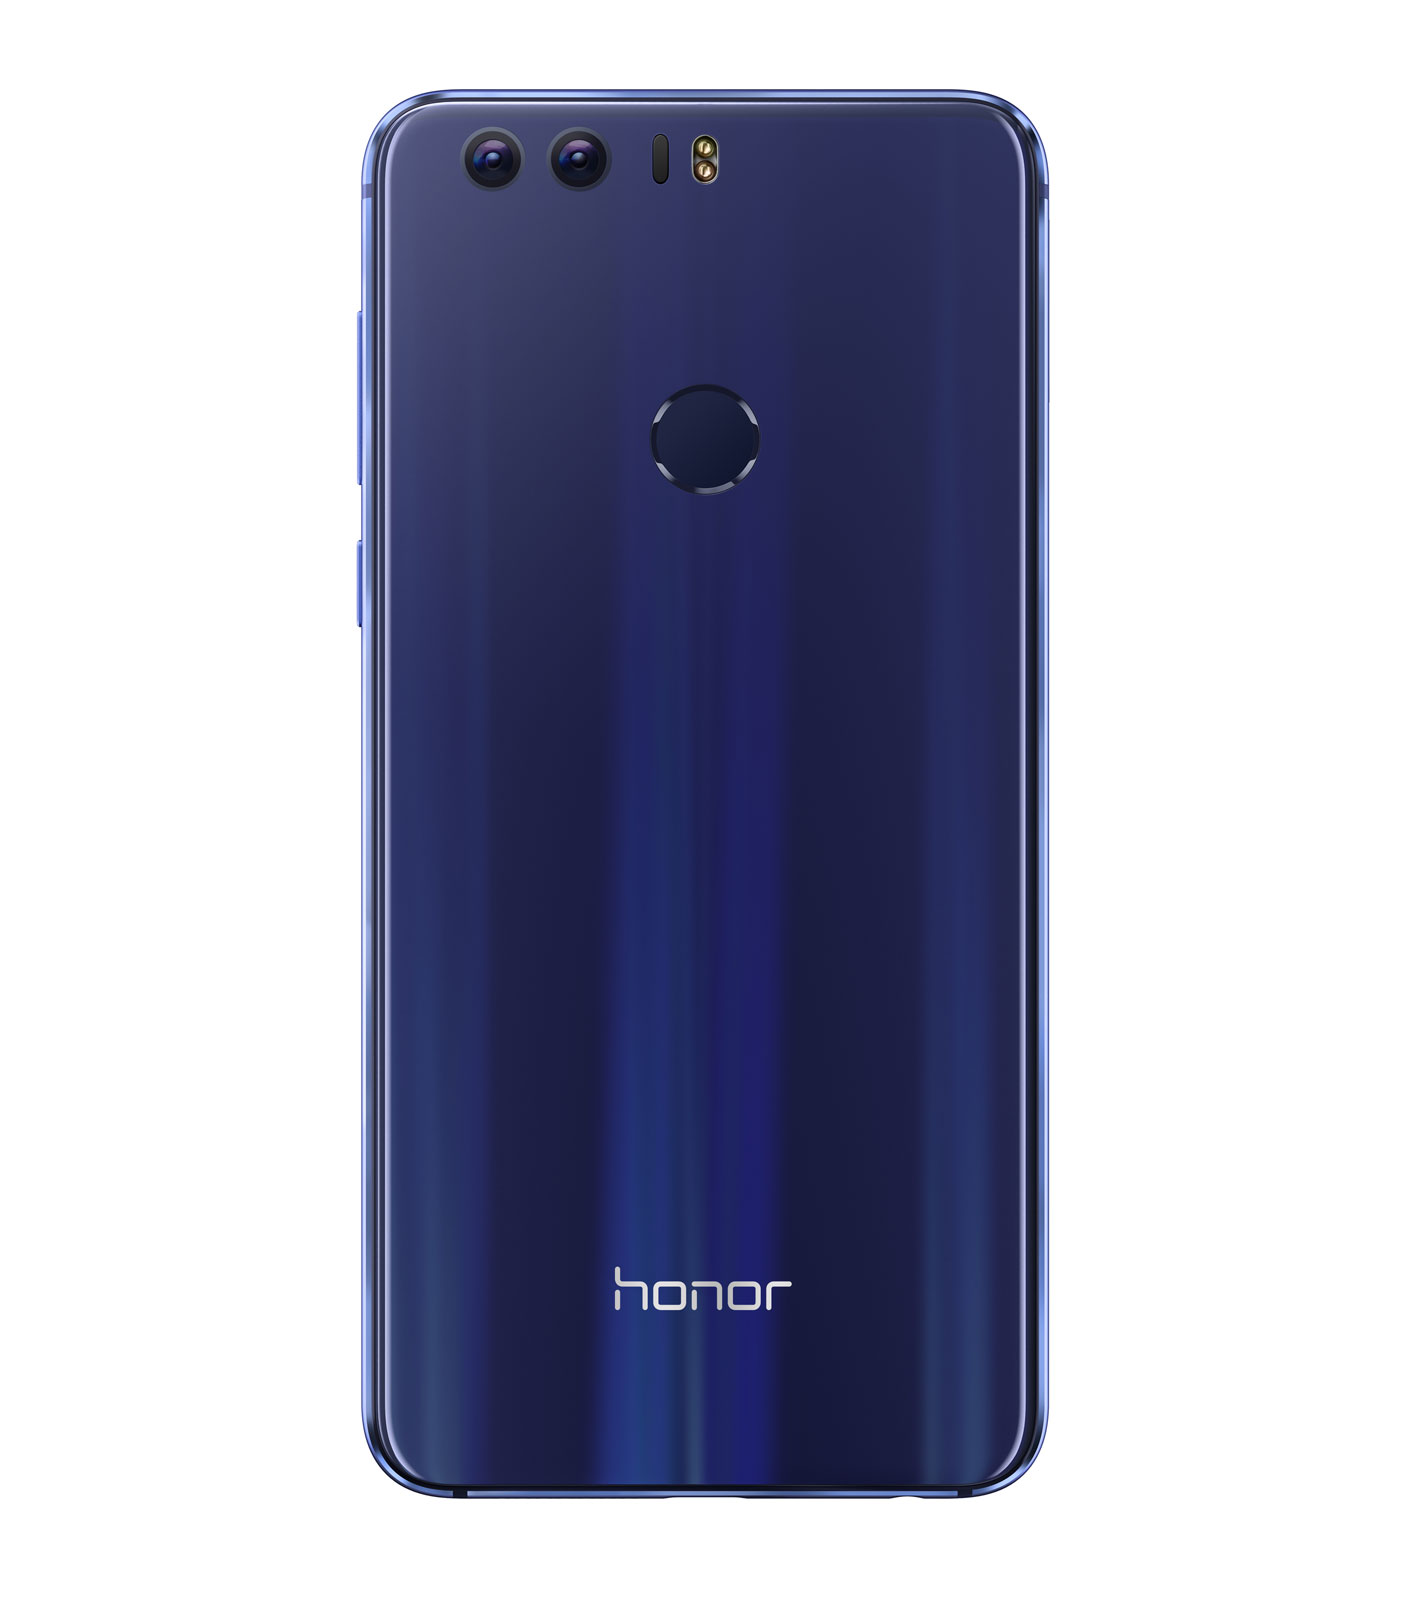 Huawei honor 8 lite smartphone test